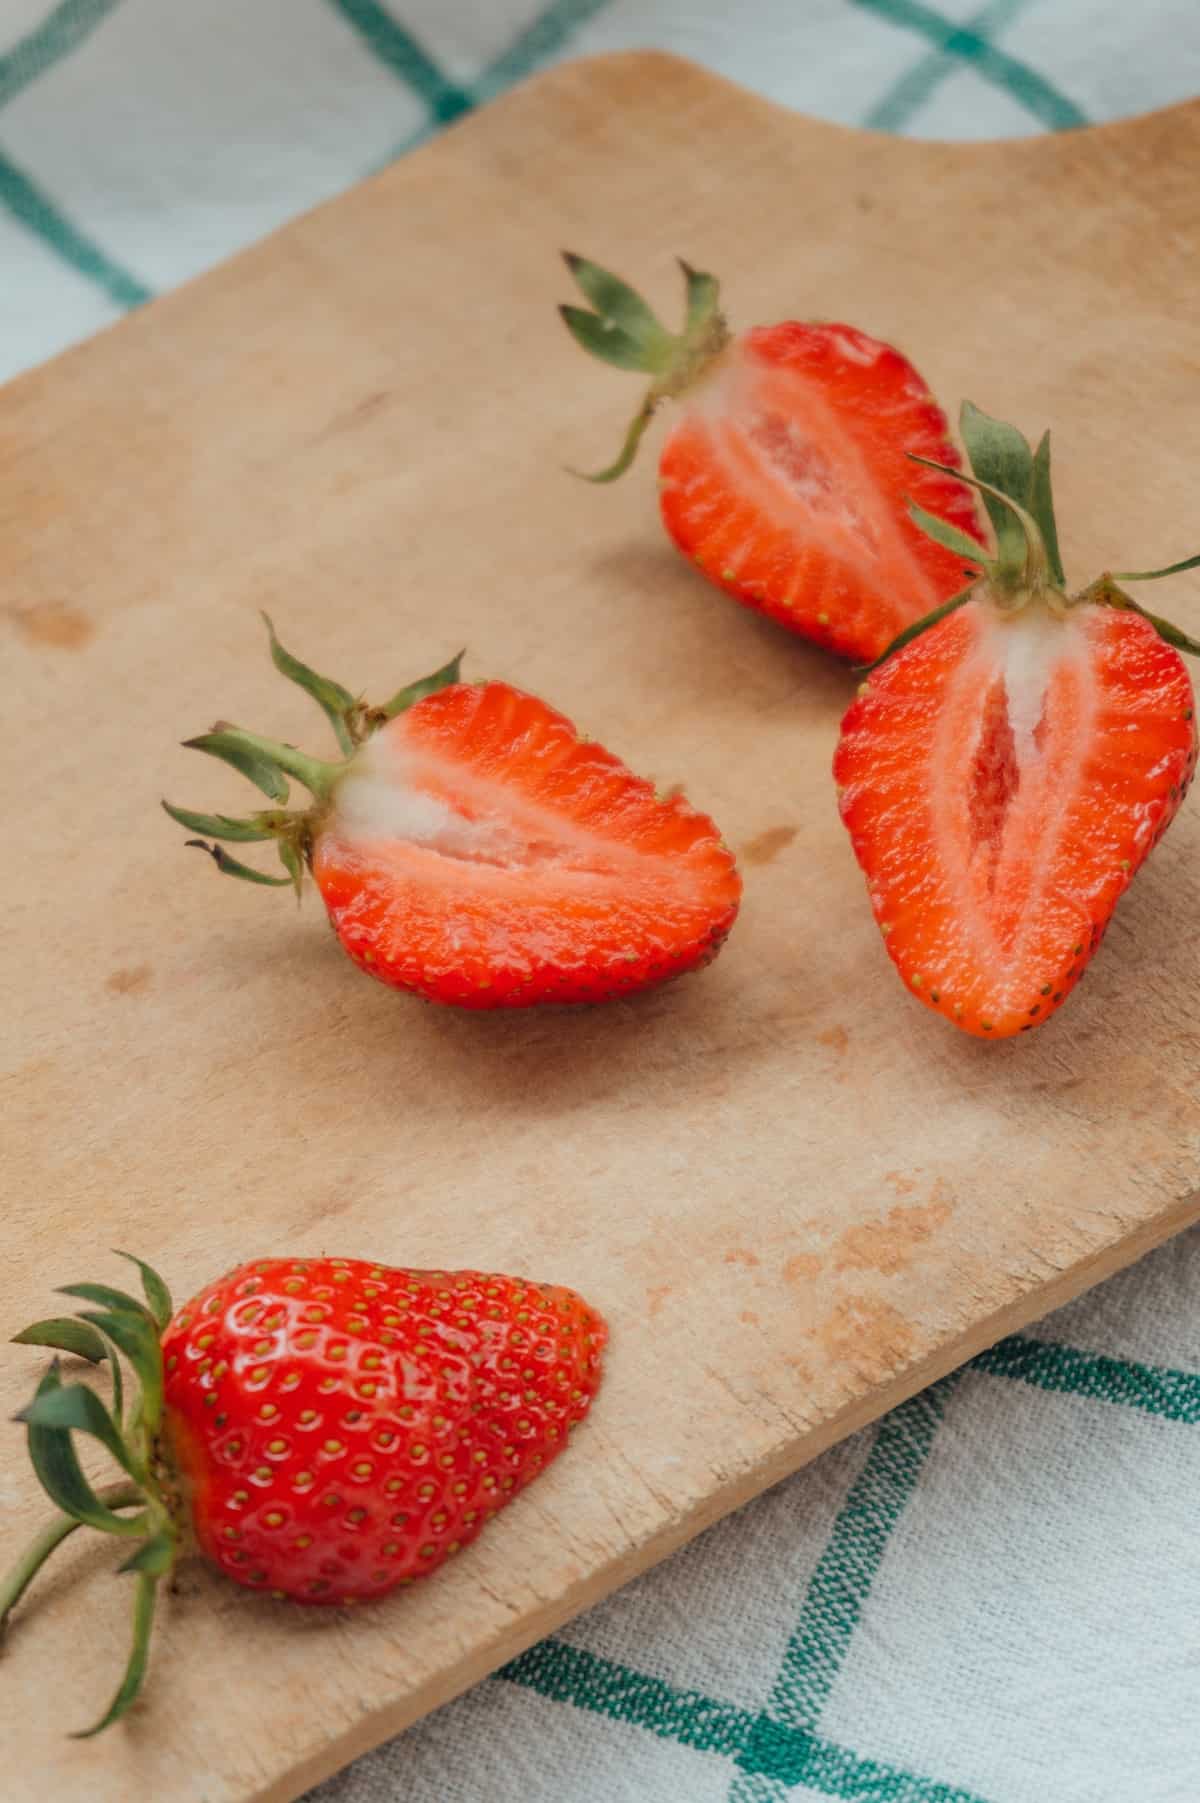 halved strawberries on a wooden cutting board. photo credit hanna balan.